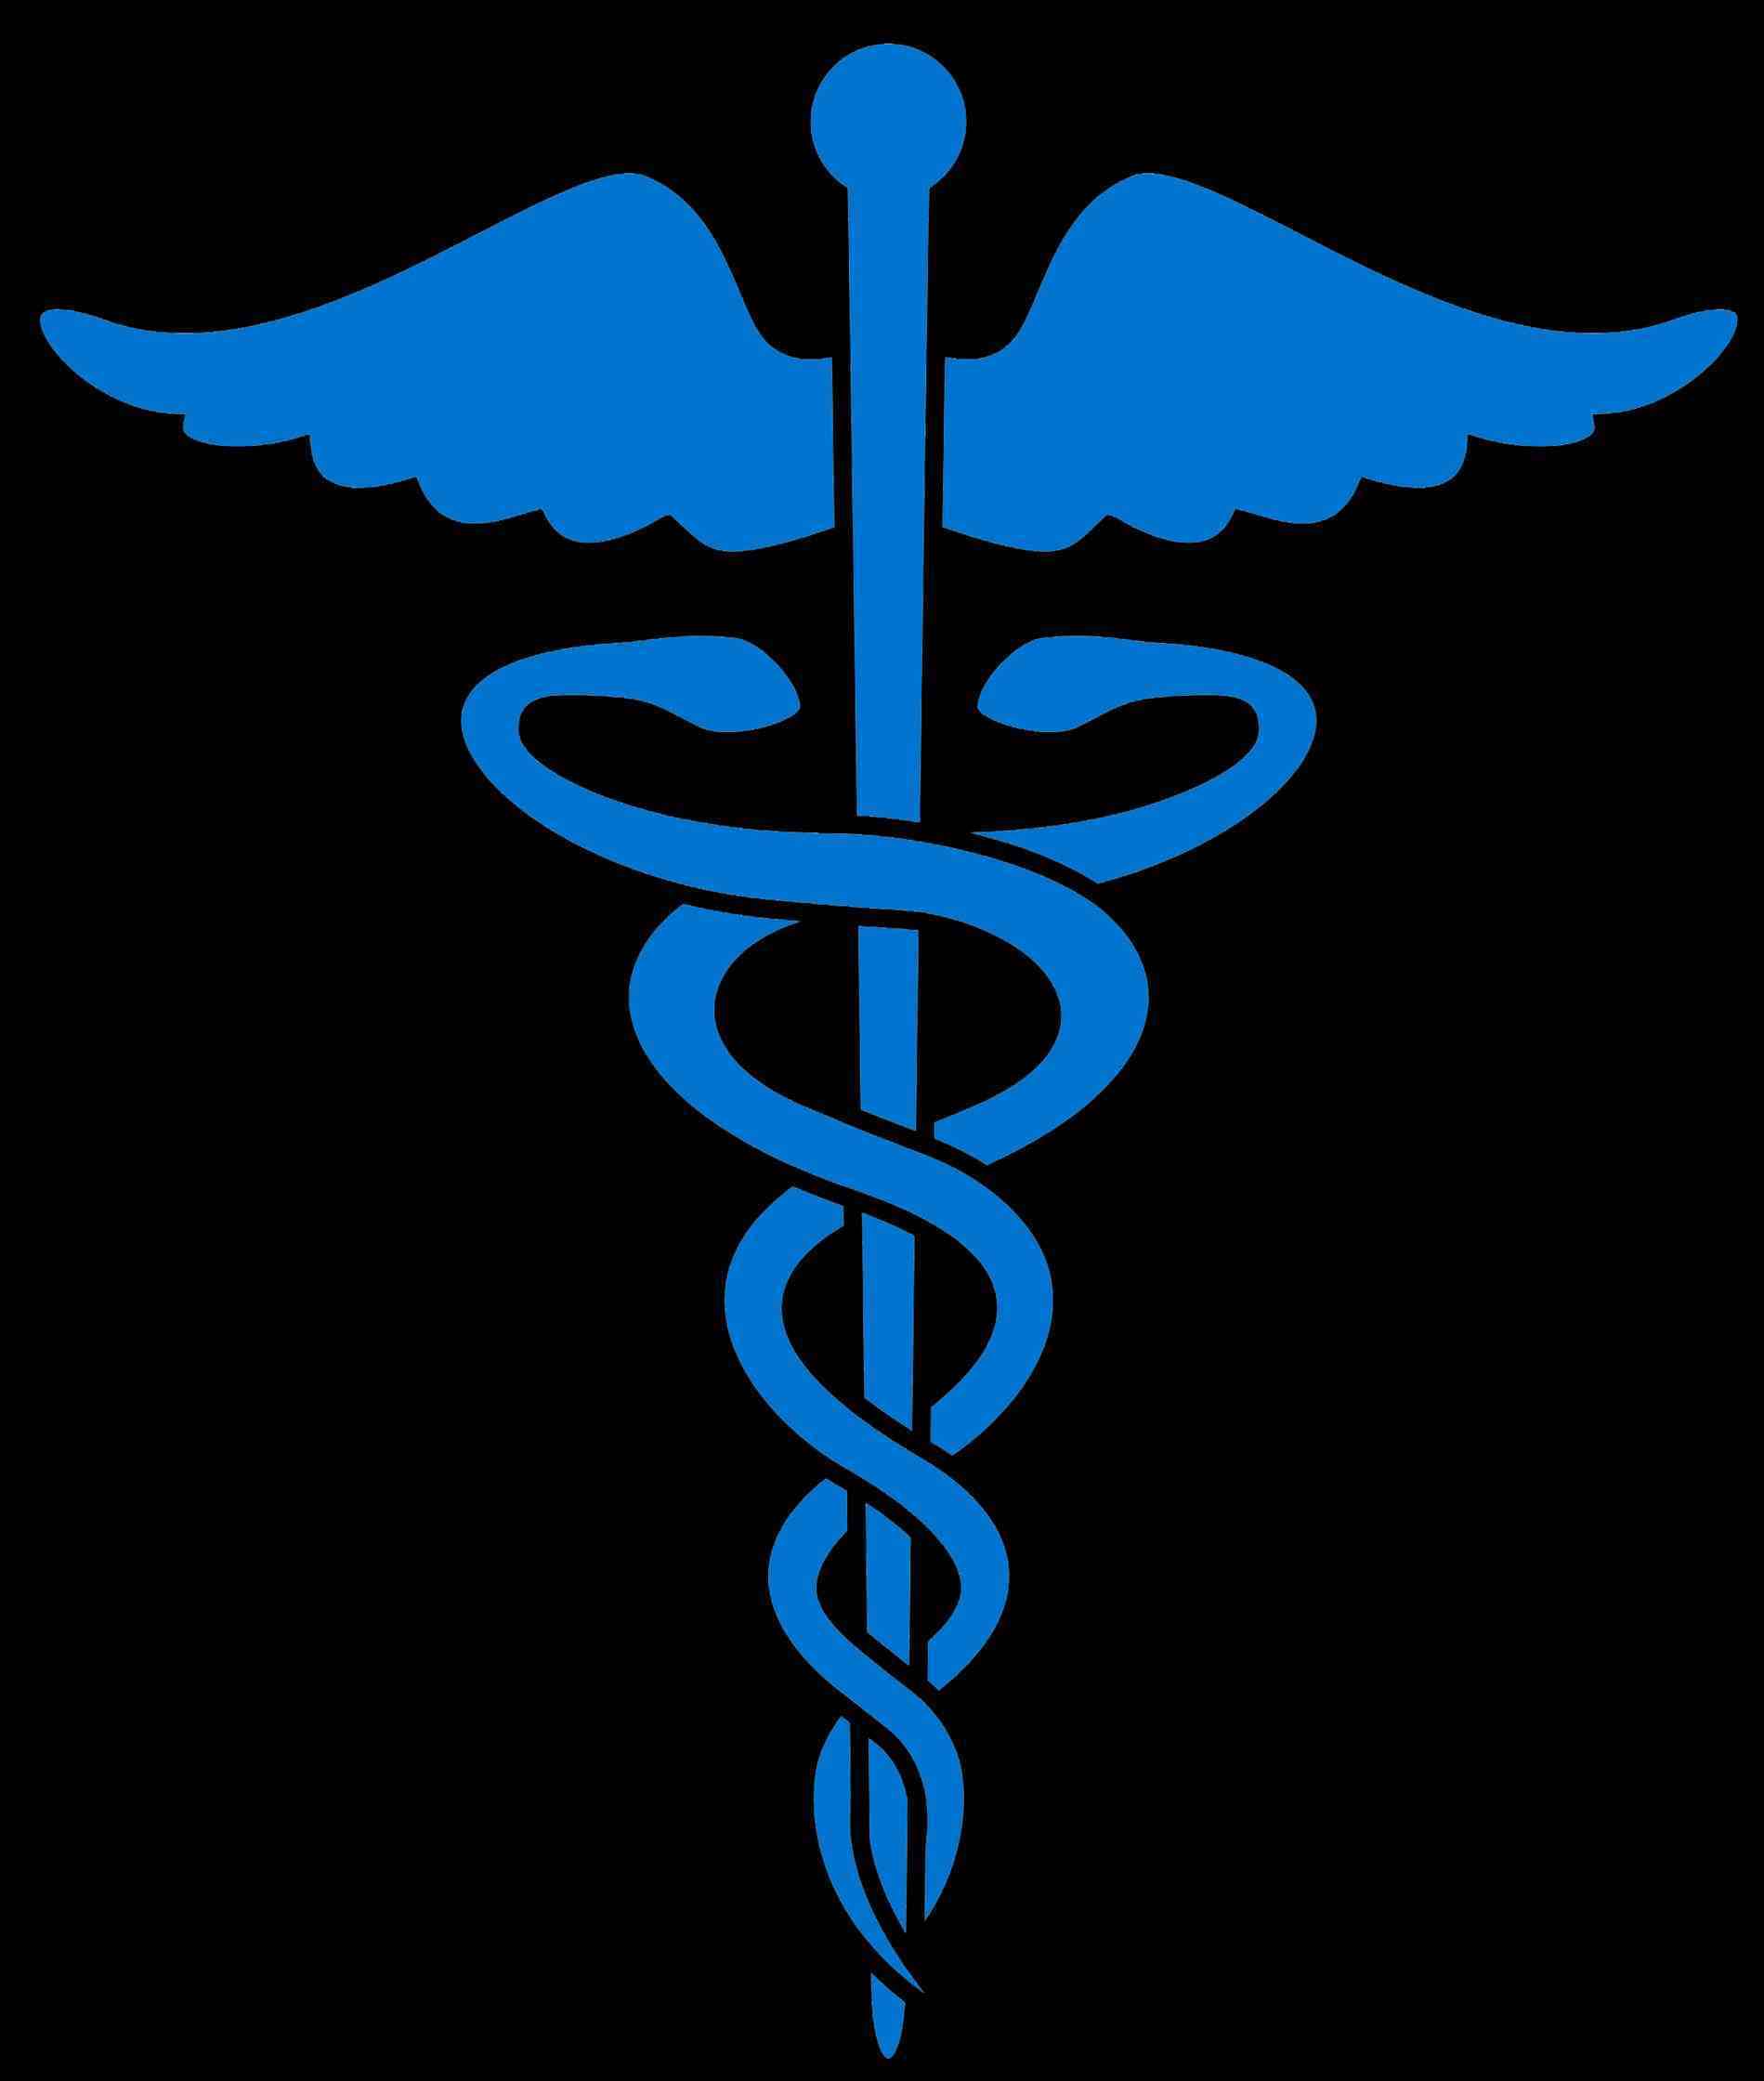 medical-health-symbol-png-logo-free-transparent-logosrhfreelogoscom-filepublic-icon-noun-project-svg-wikimedia-commonsrhcommonswikimediaorg-filepublic-health-symbol-png-icon-noun-project